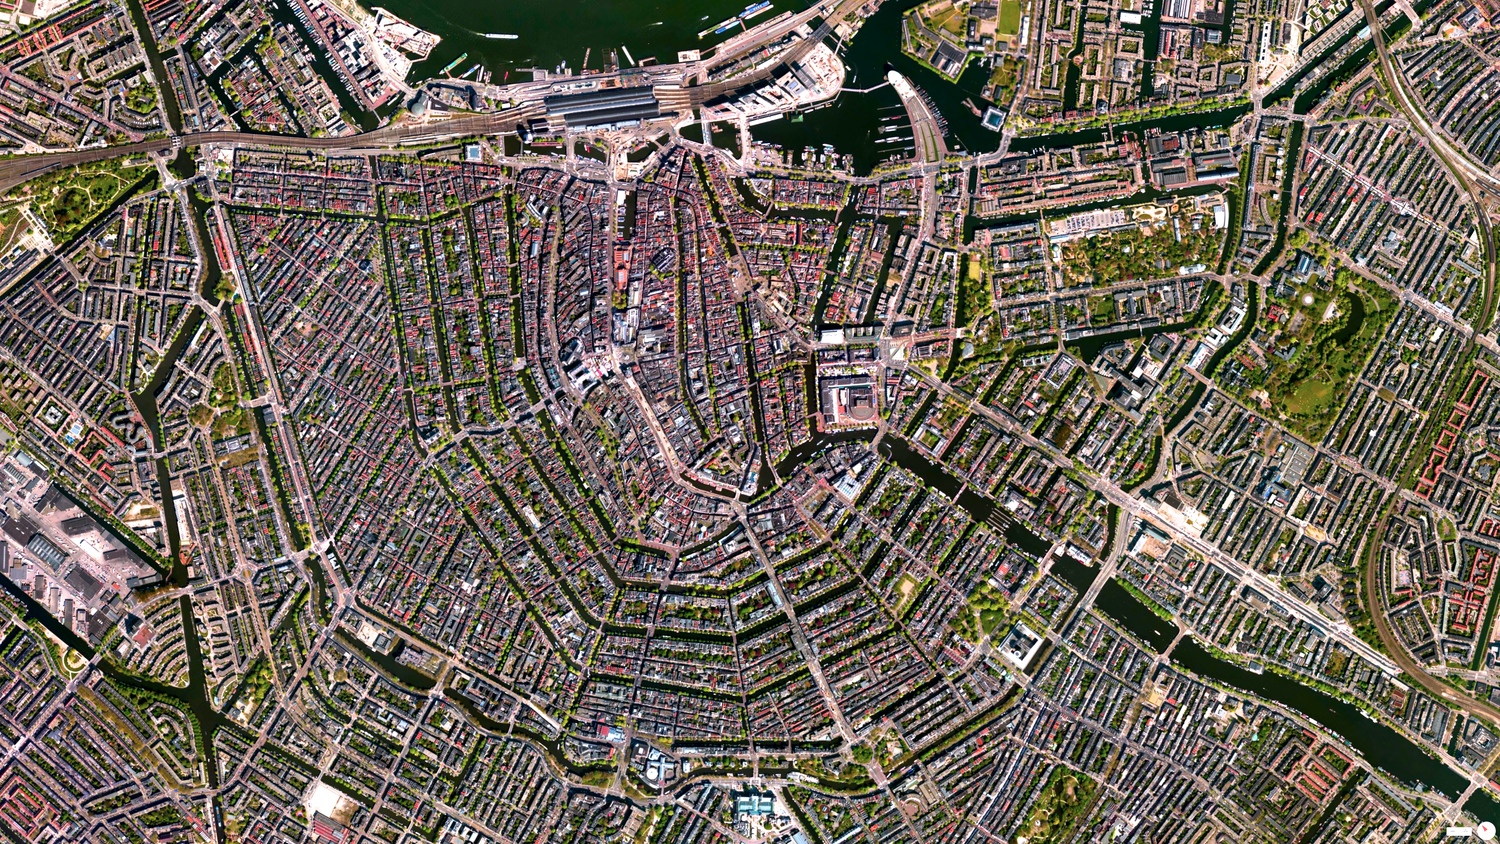 Sistema kanalov Amsterdama